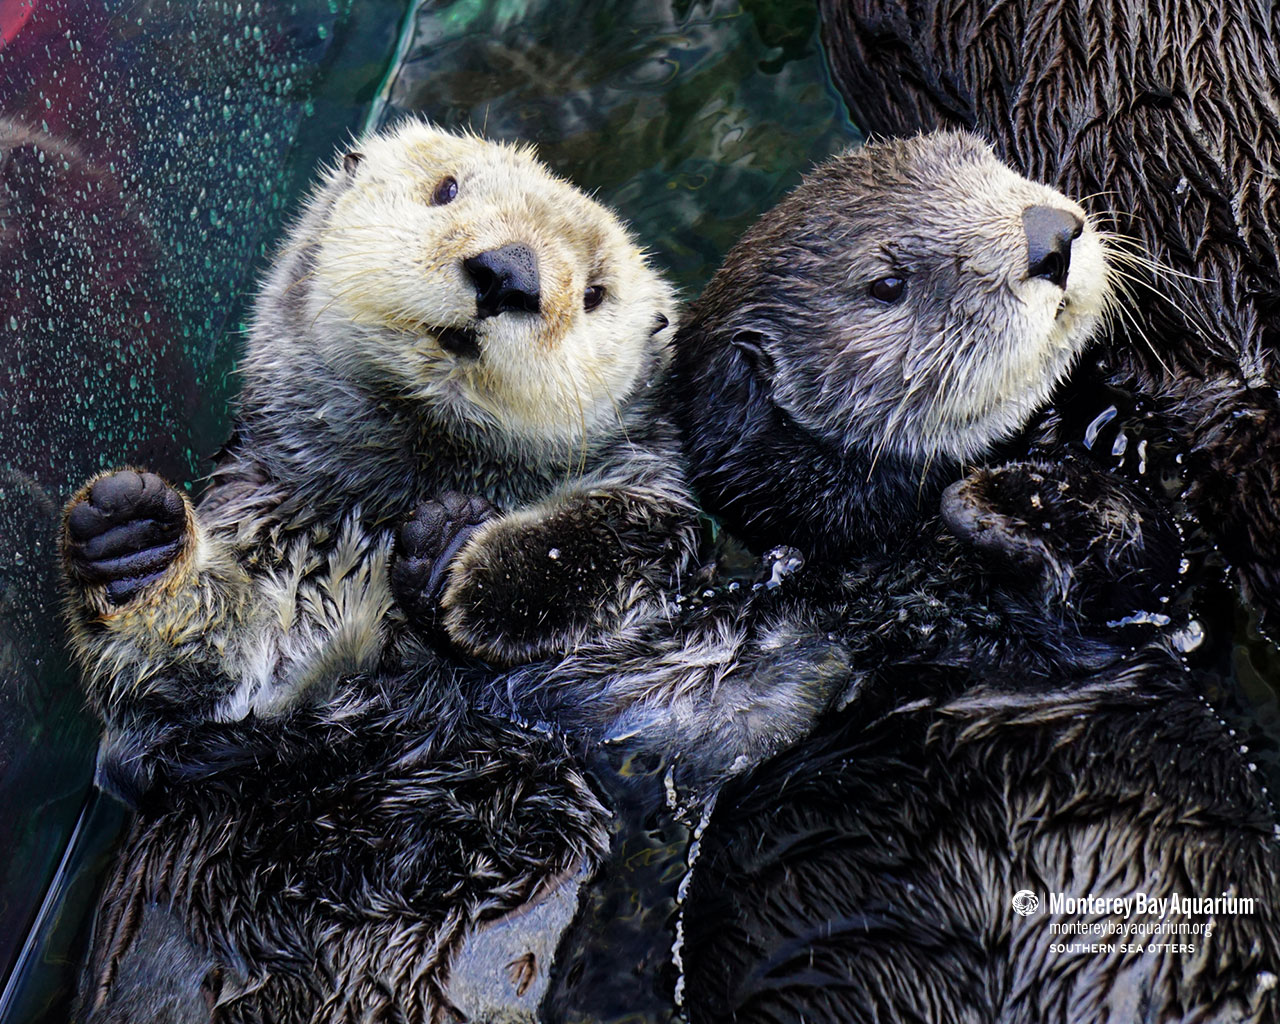 Southern sea otters | Wallpapers | Monterey Bay Aquarium